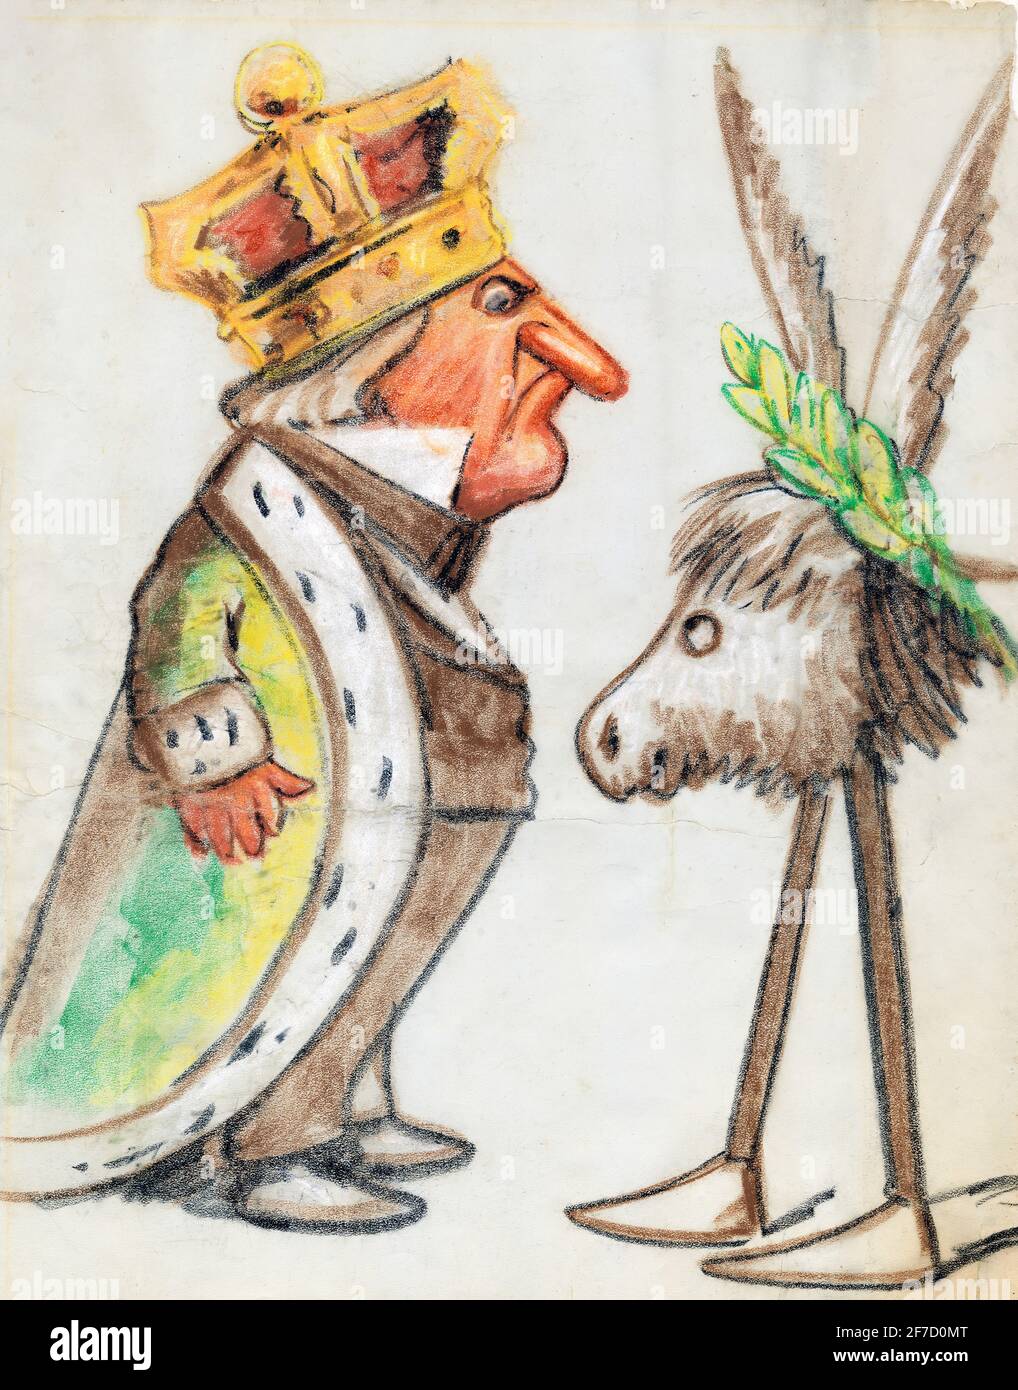 Karikatur des US-Präsidenten Andrew Johnson vom amerikanischen Karikaturisten und Karikaturisten Thomas Nast (1840-1902), Pastell auf Papier, 1873 Stockfoto